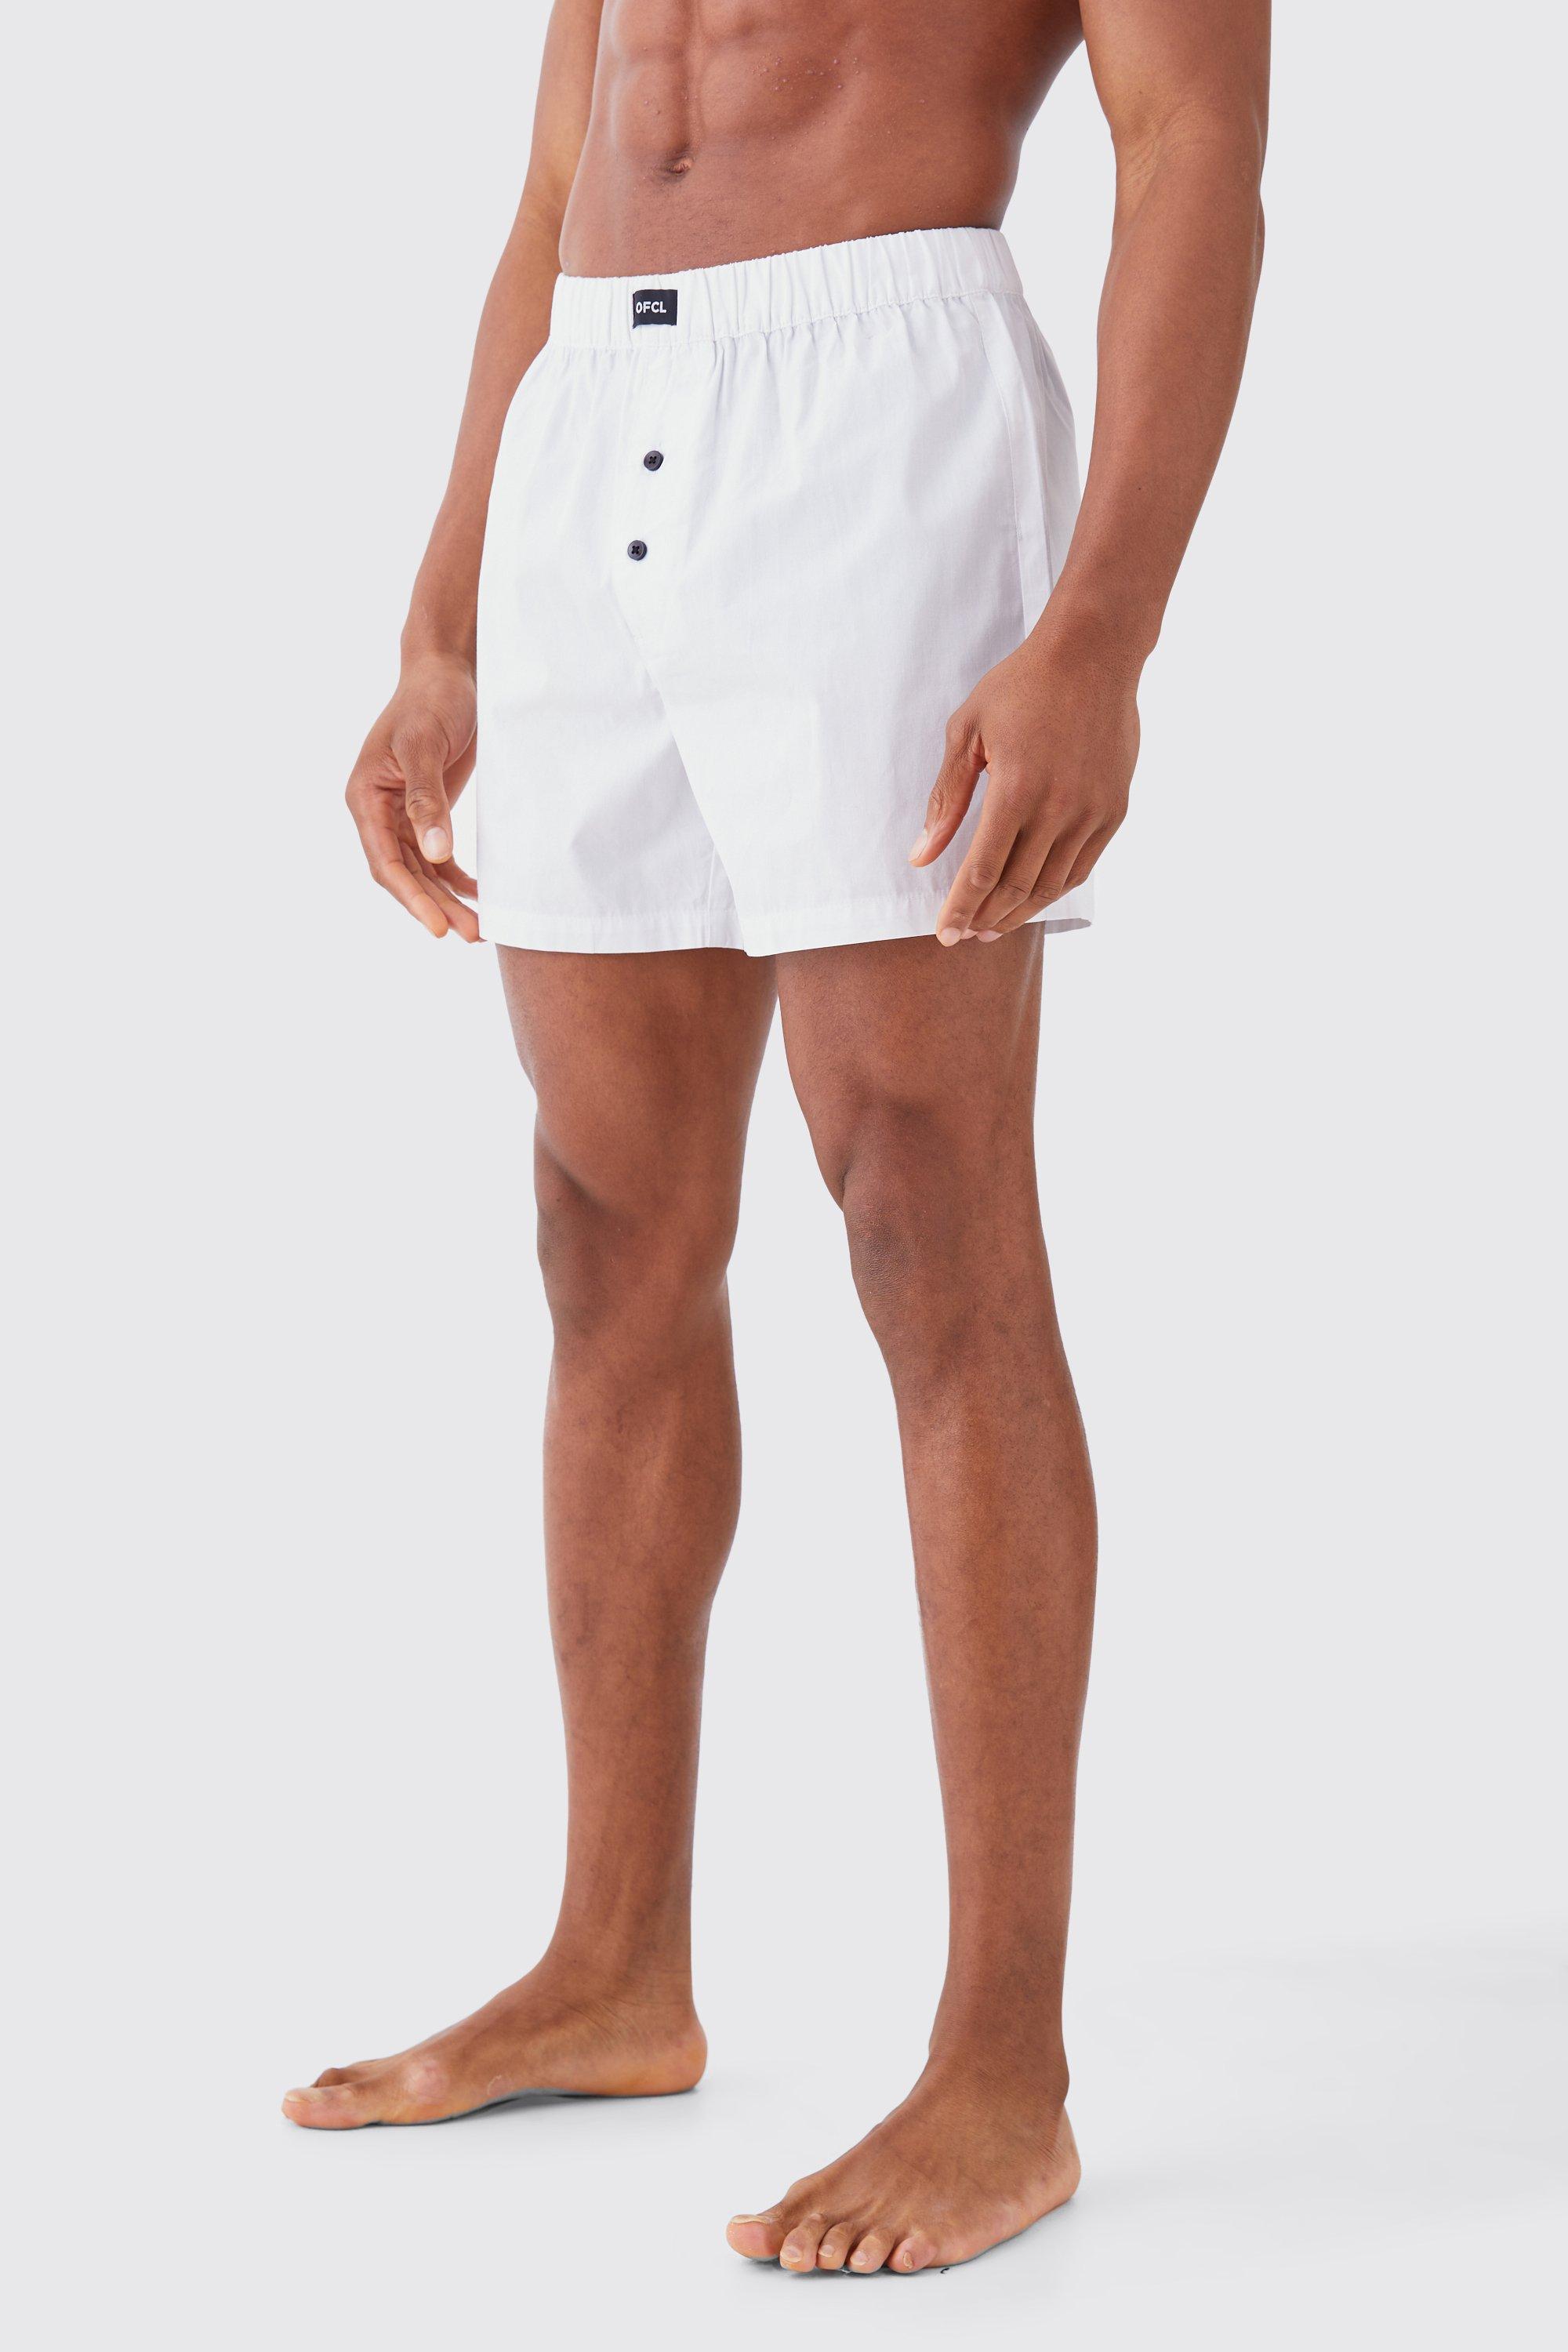 Womens Ofcl Woven Boxer Shorts - White - S, White